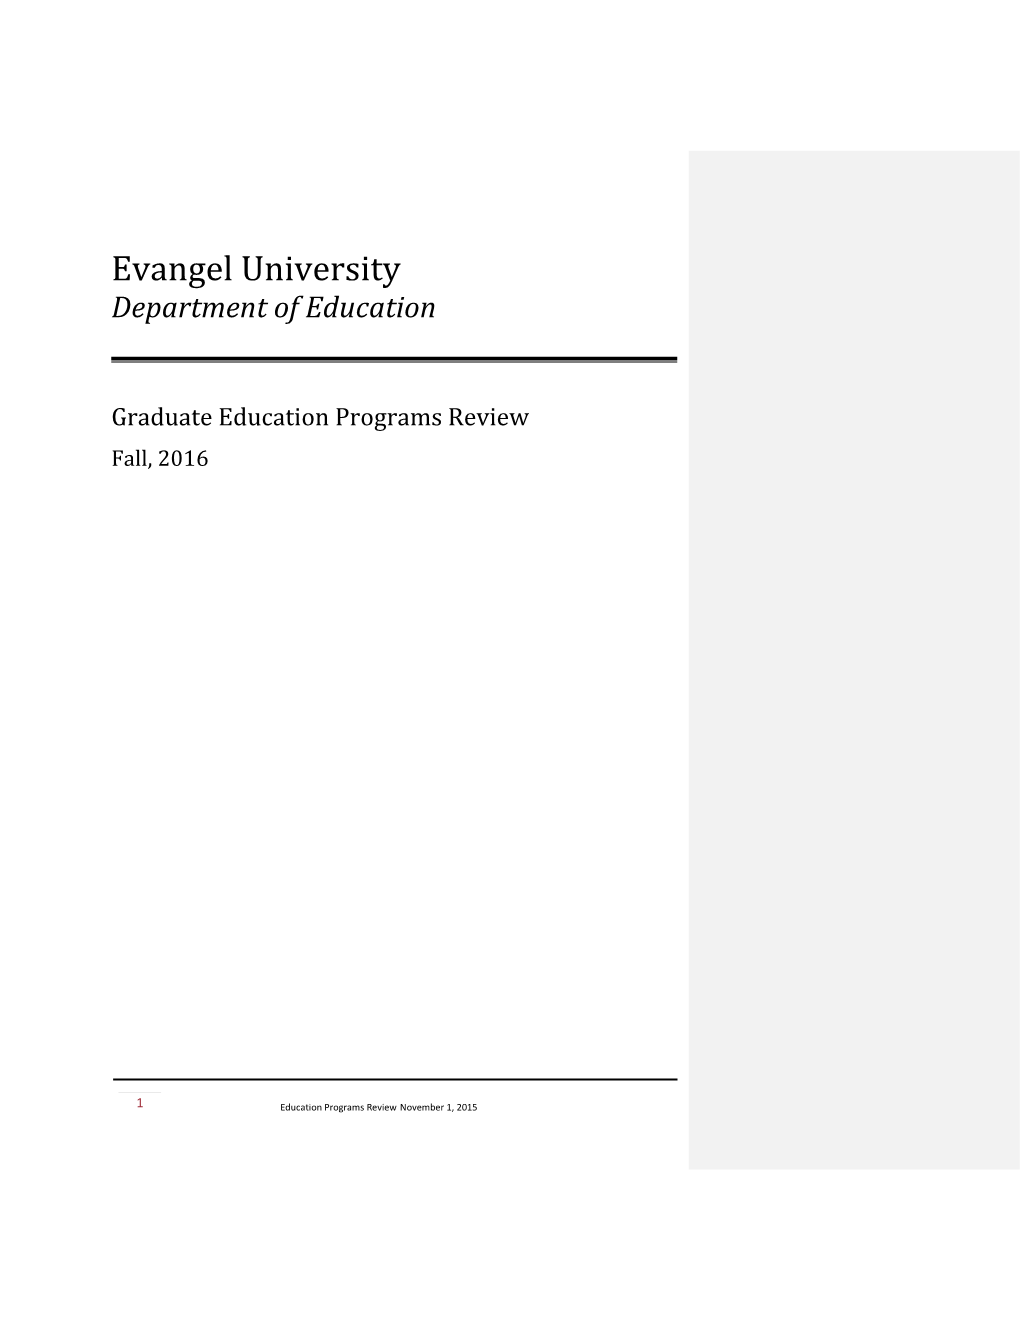 Graduate Education Programs Review Fall, 2016